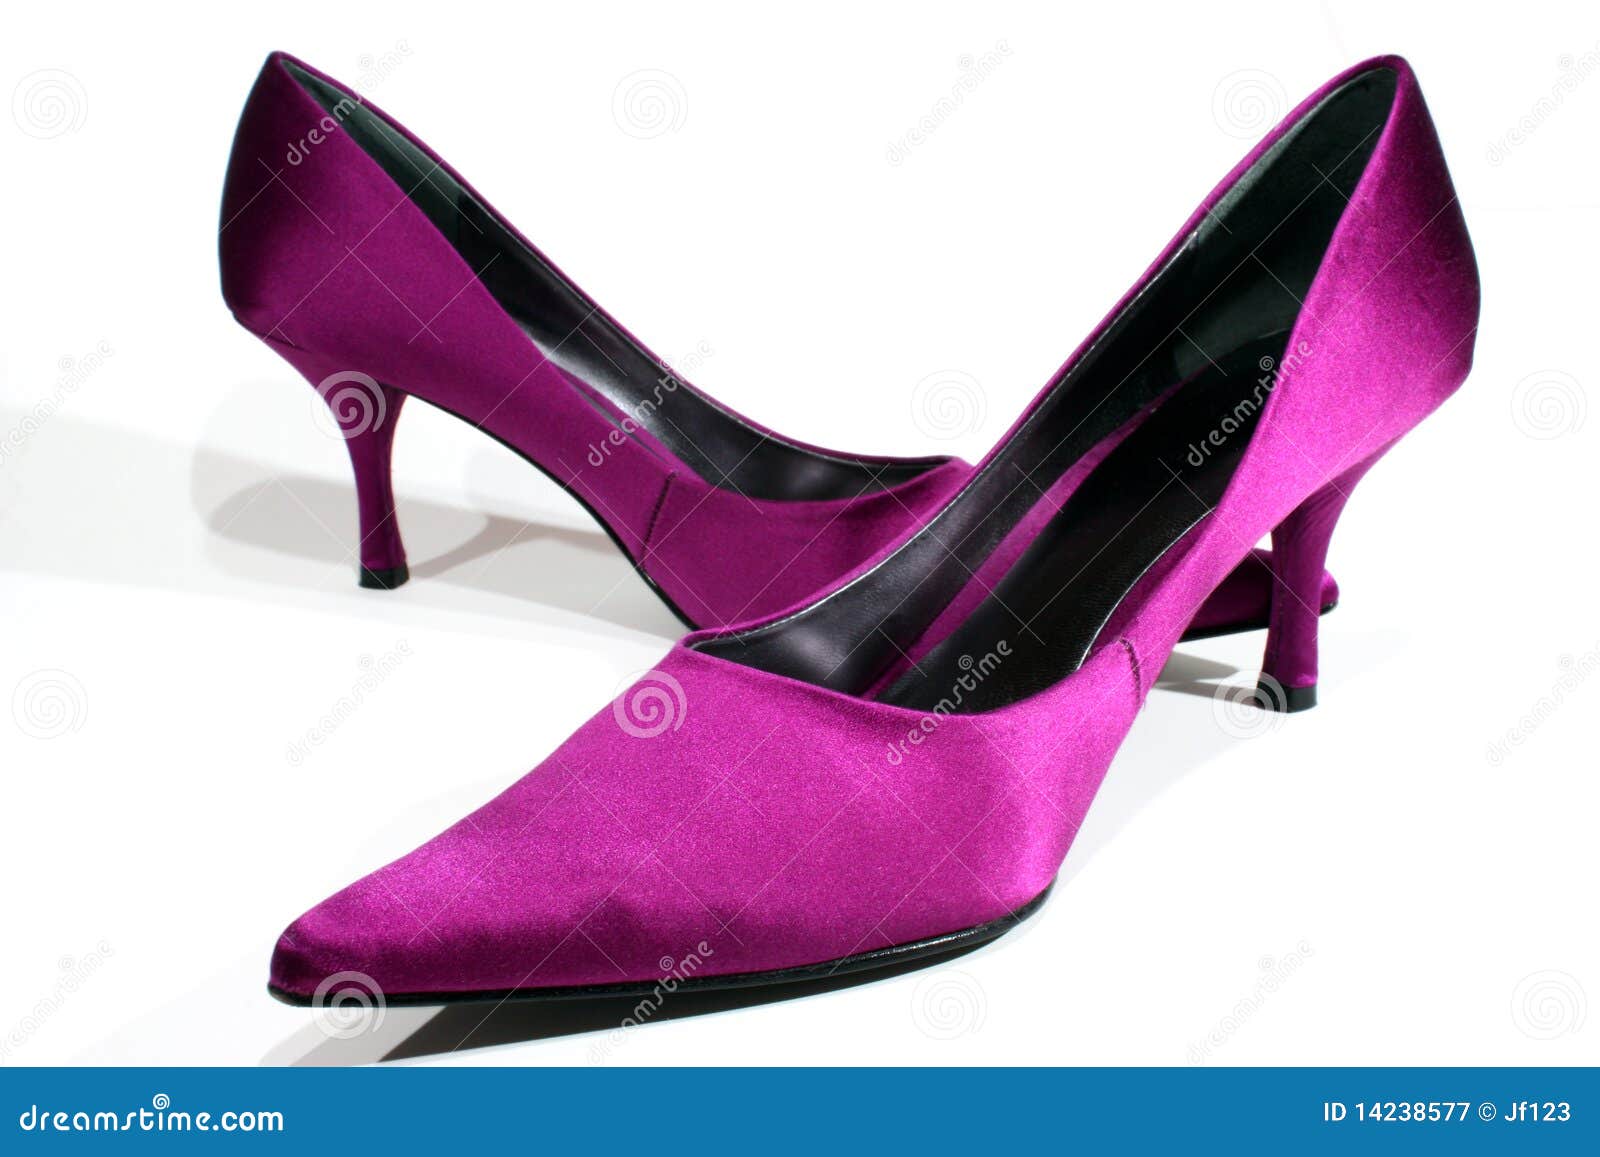 Fancy shoes stock image. Image of classy, footwear, luxury - 14238577